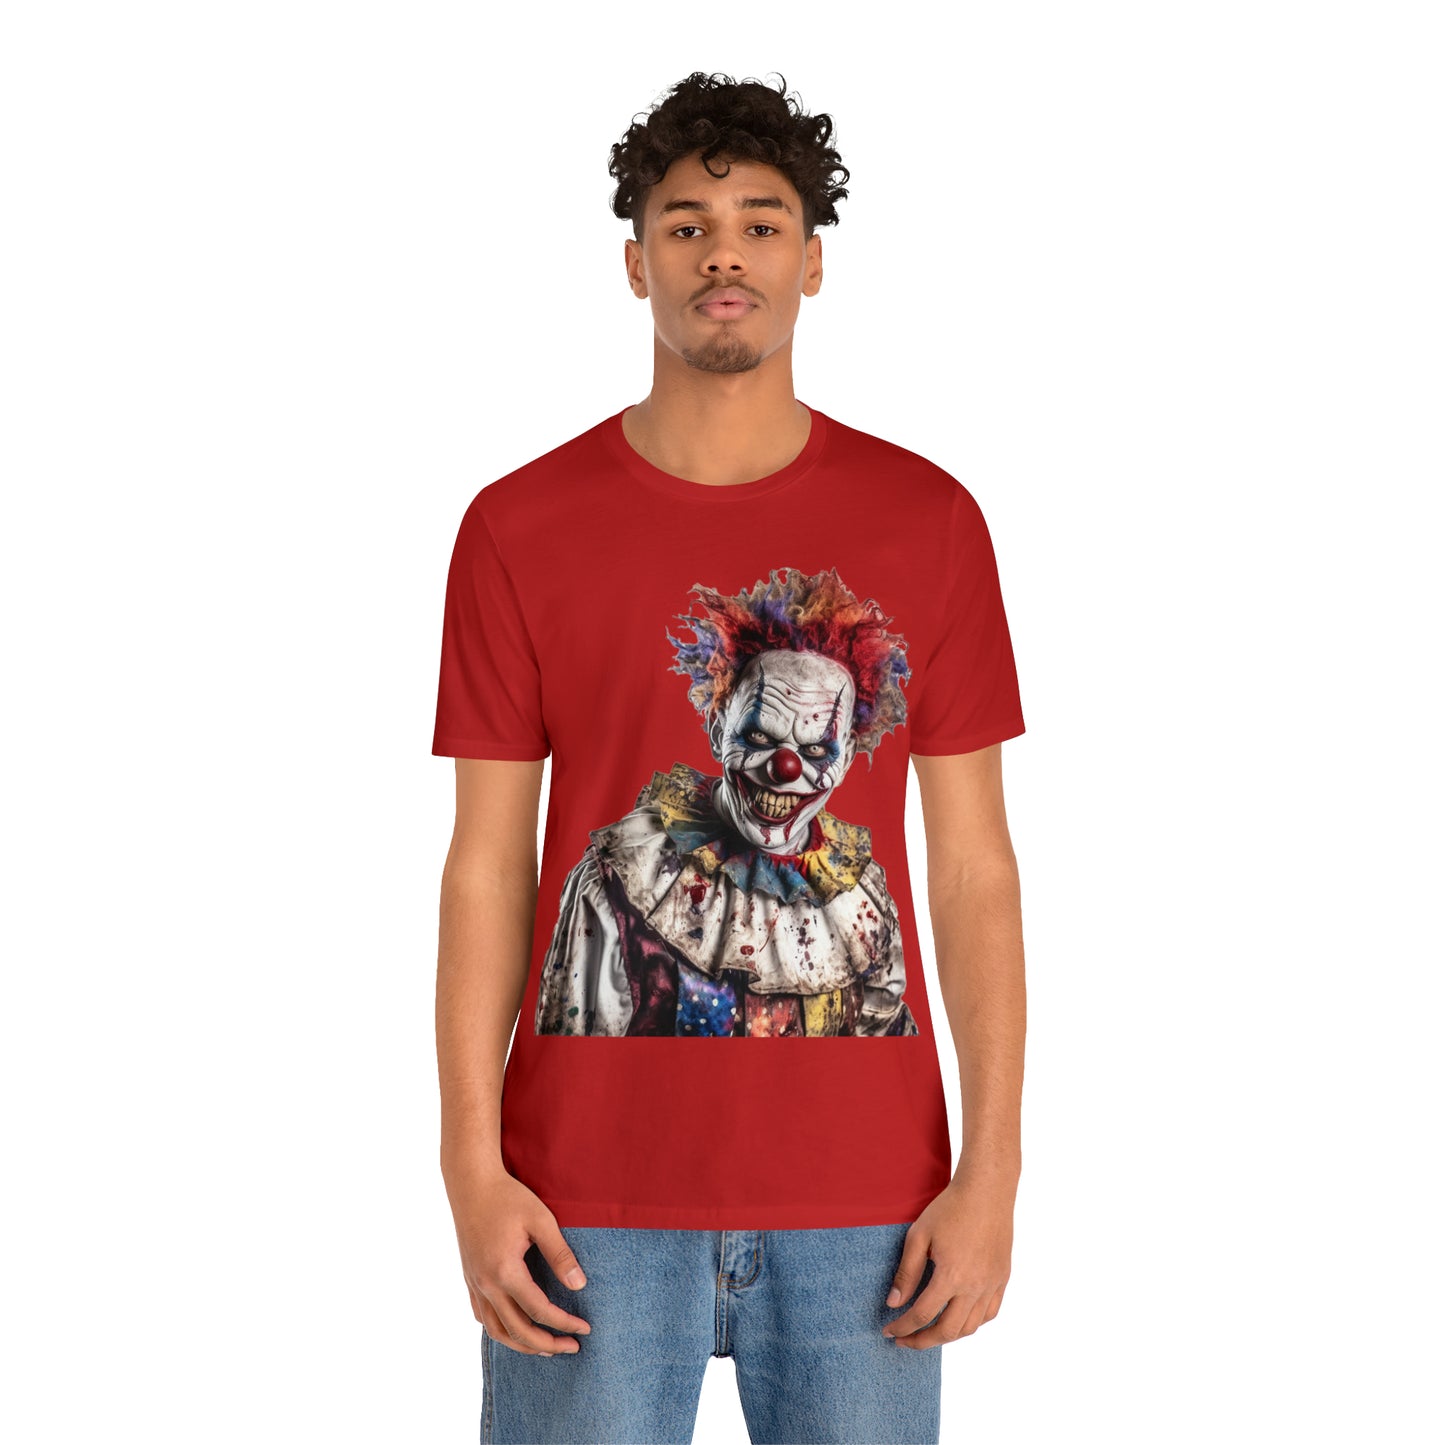 Creepy Clown Halloween Unisex Jersey Short Sleeve Tee